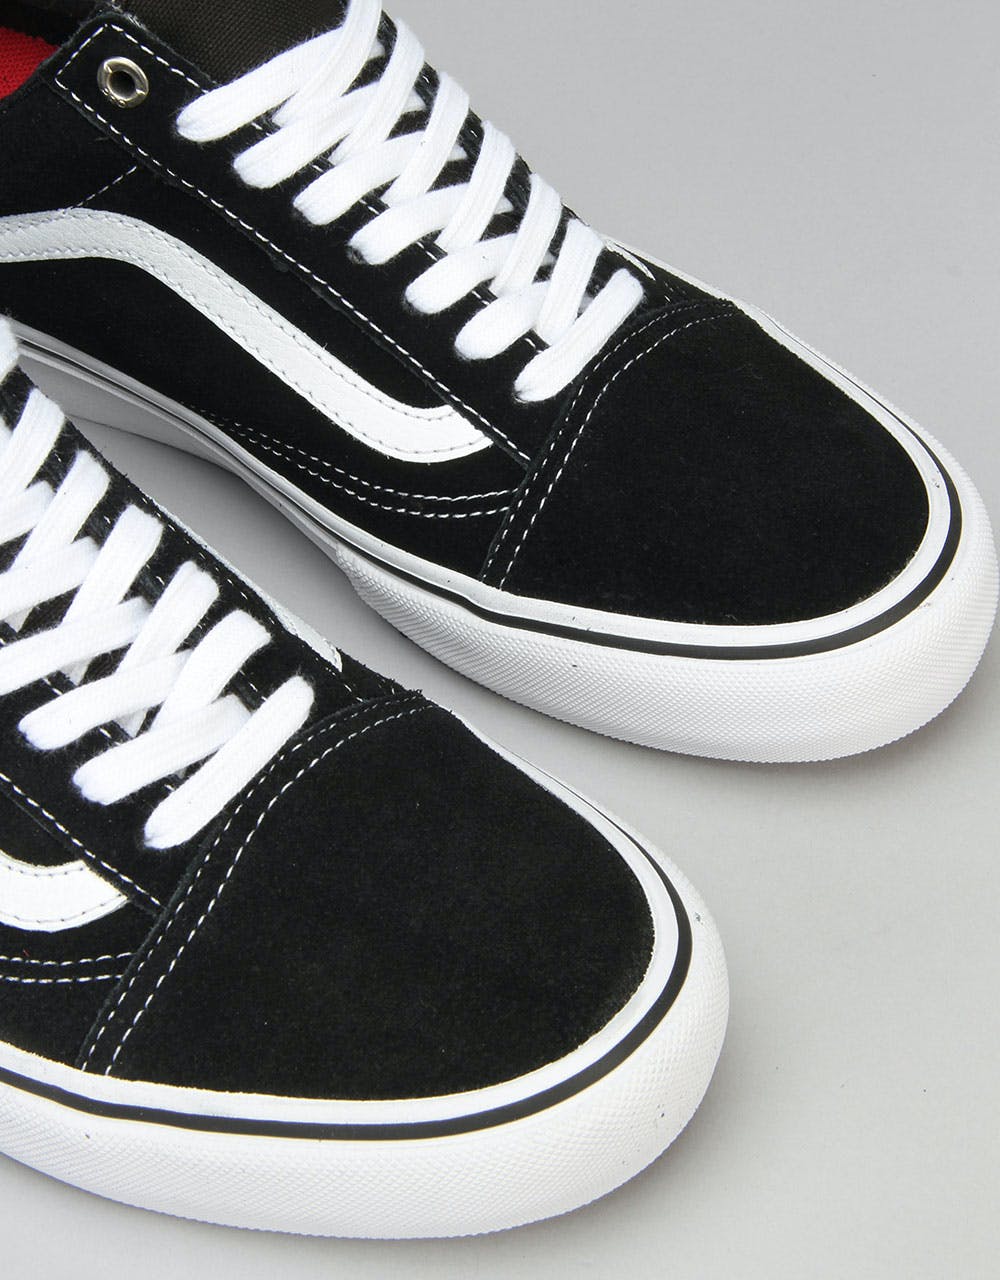 Vans Old Skool '92 Pro Skate Shoes - Black/White/Red